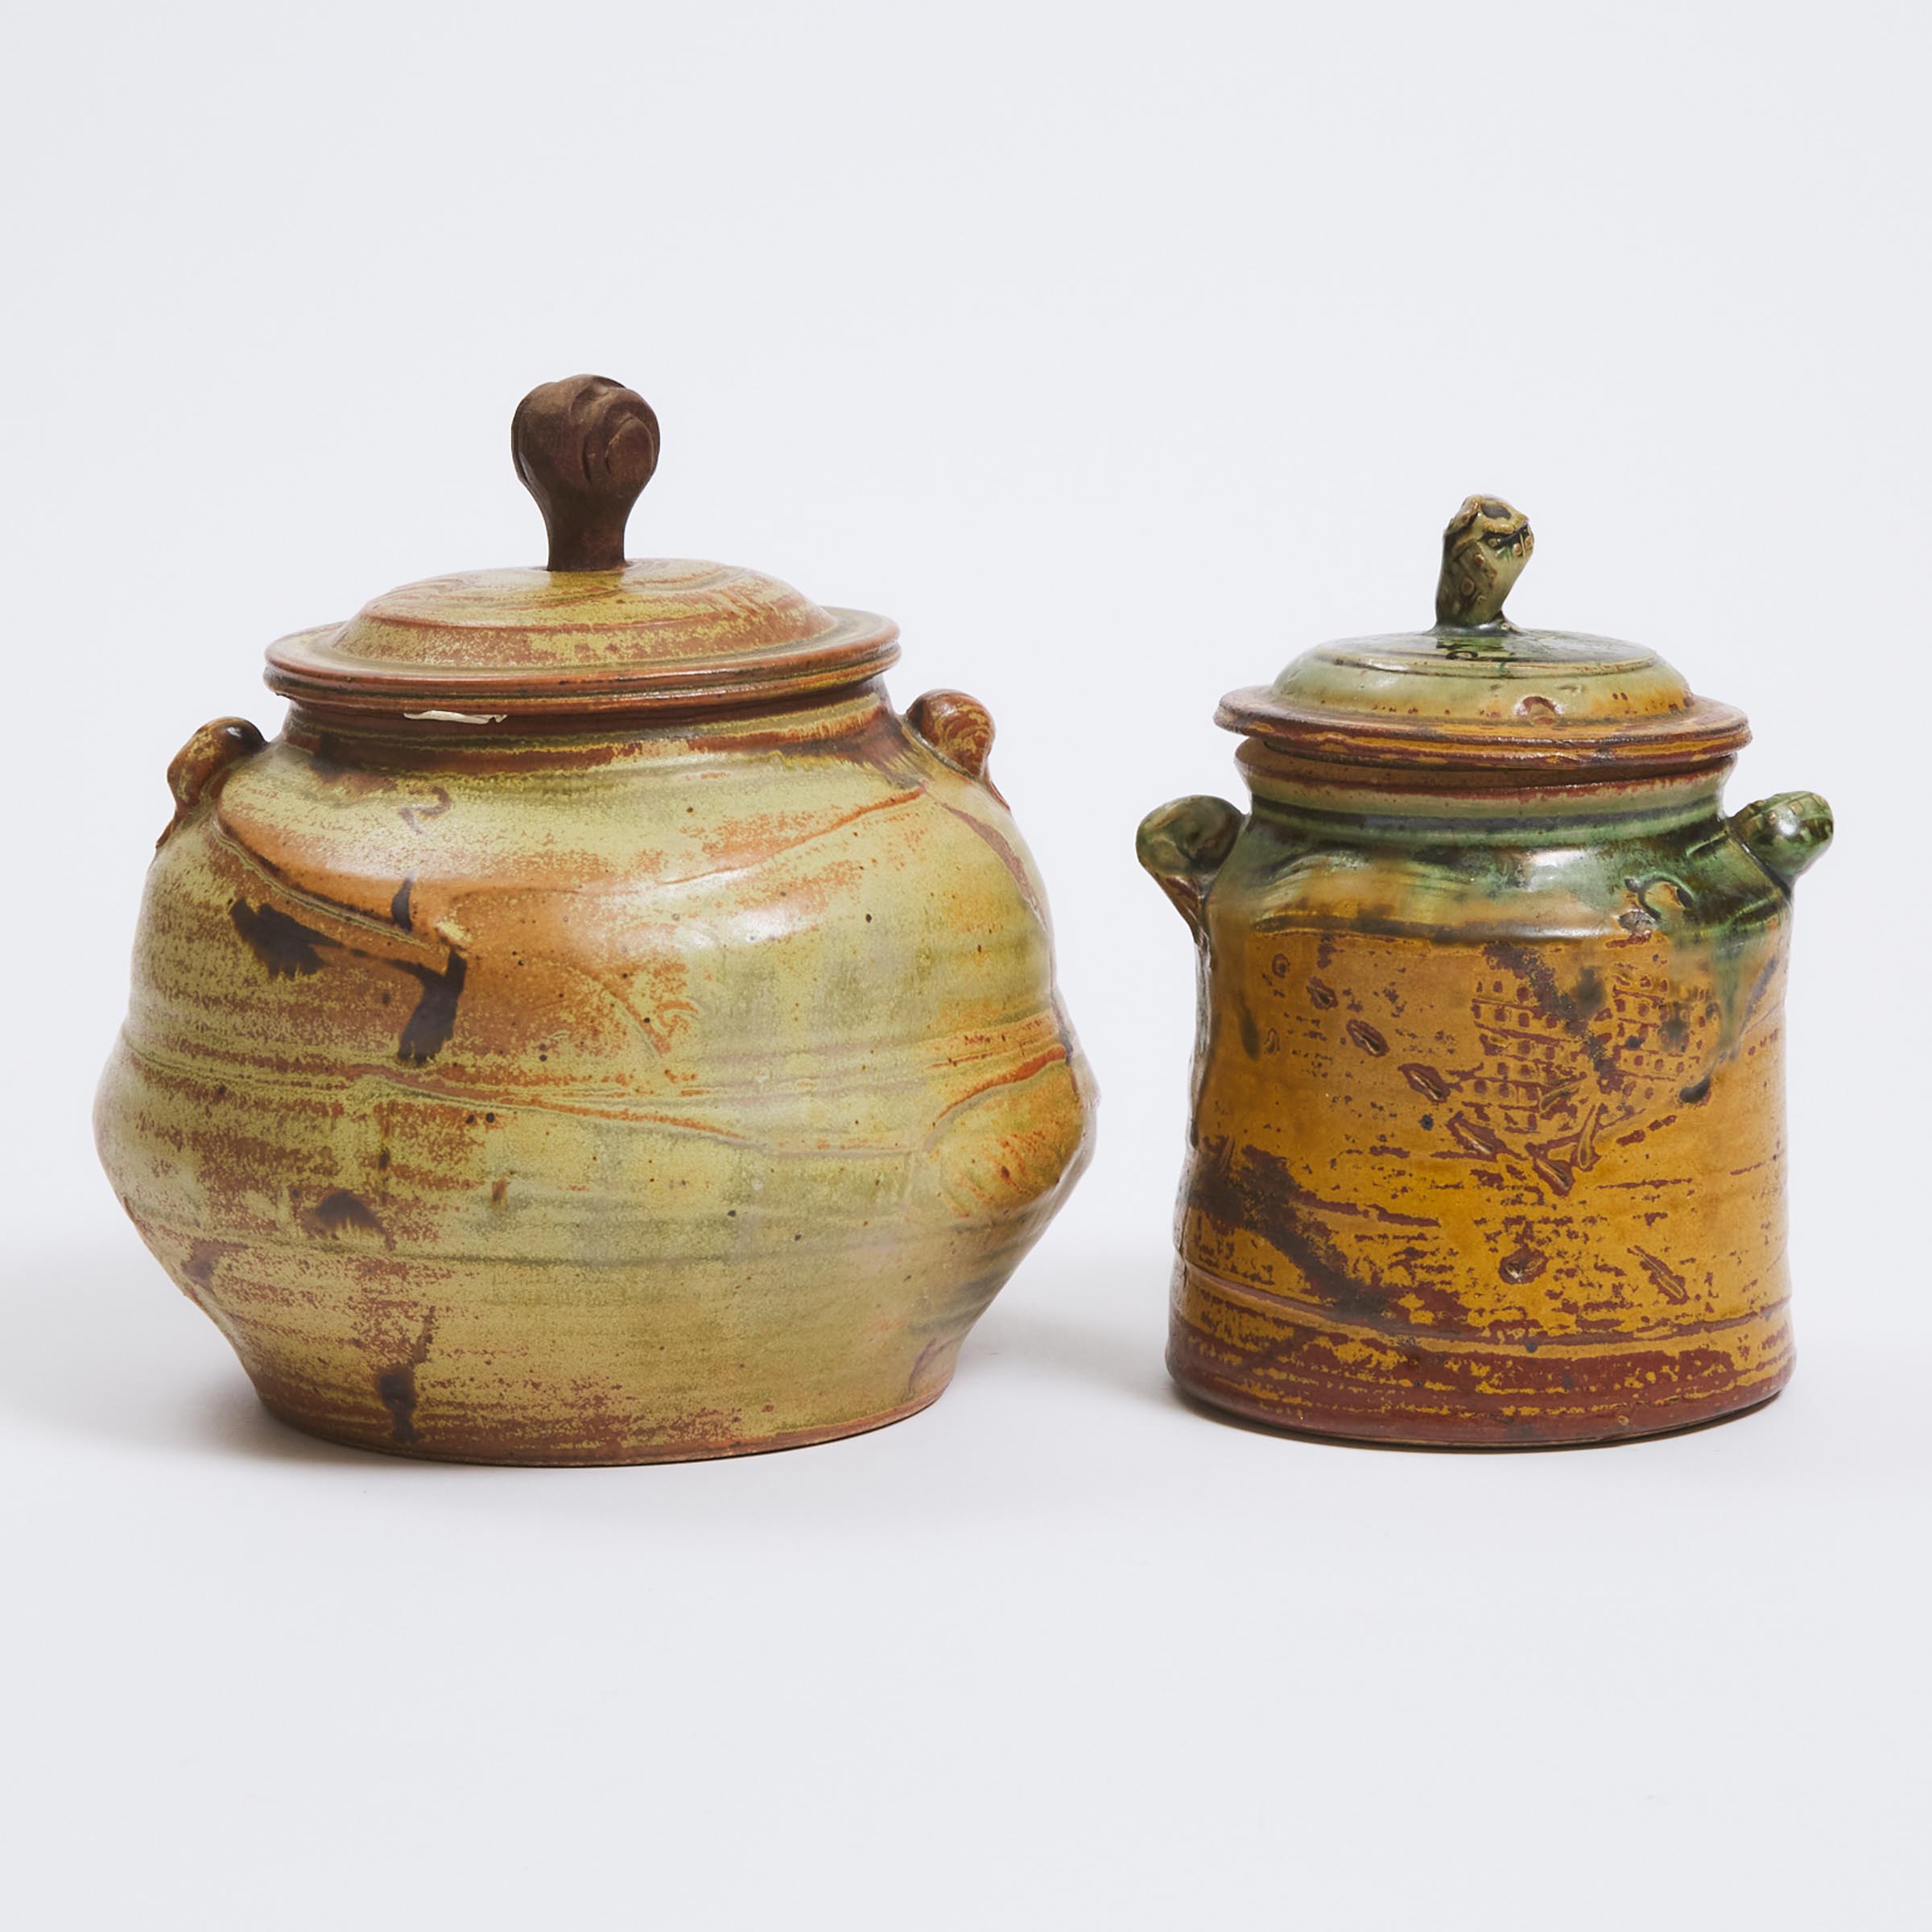 John Glick (American, 1938-2017), Two Stoneware Jars, Plum Tree Pottery, late 20th/early 21st century